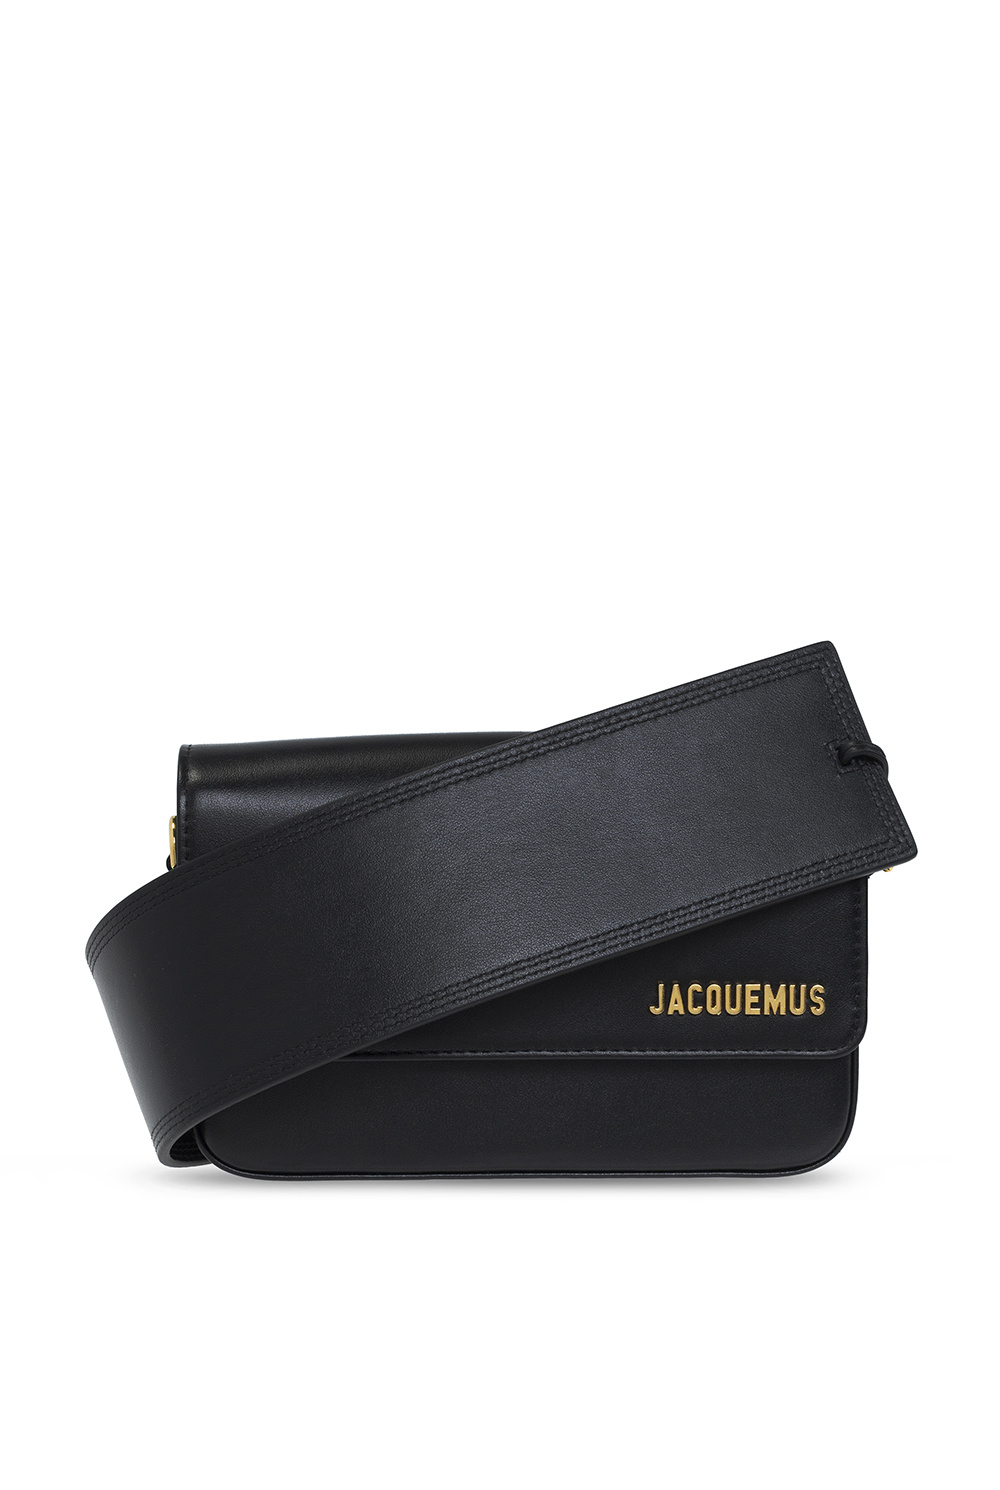 Jacquemus ‘Le Carinu’  handbag